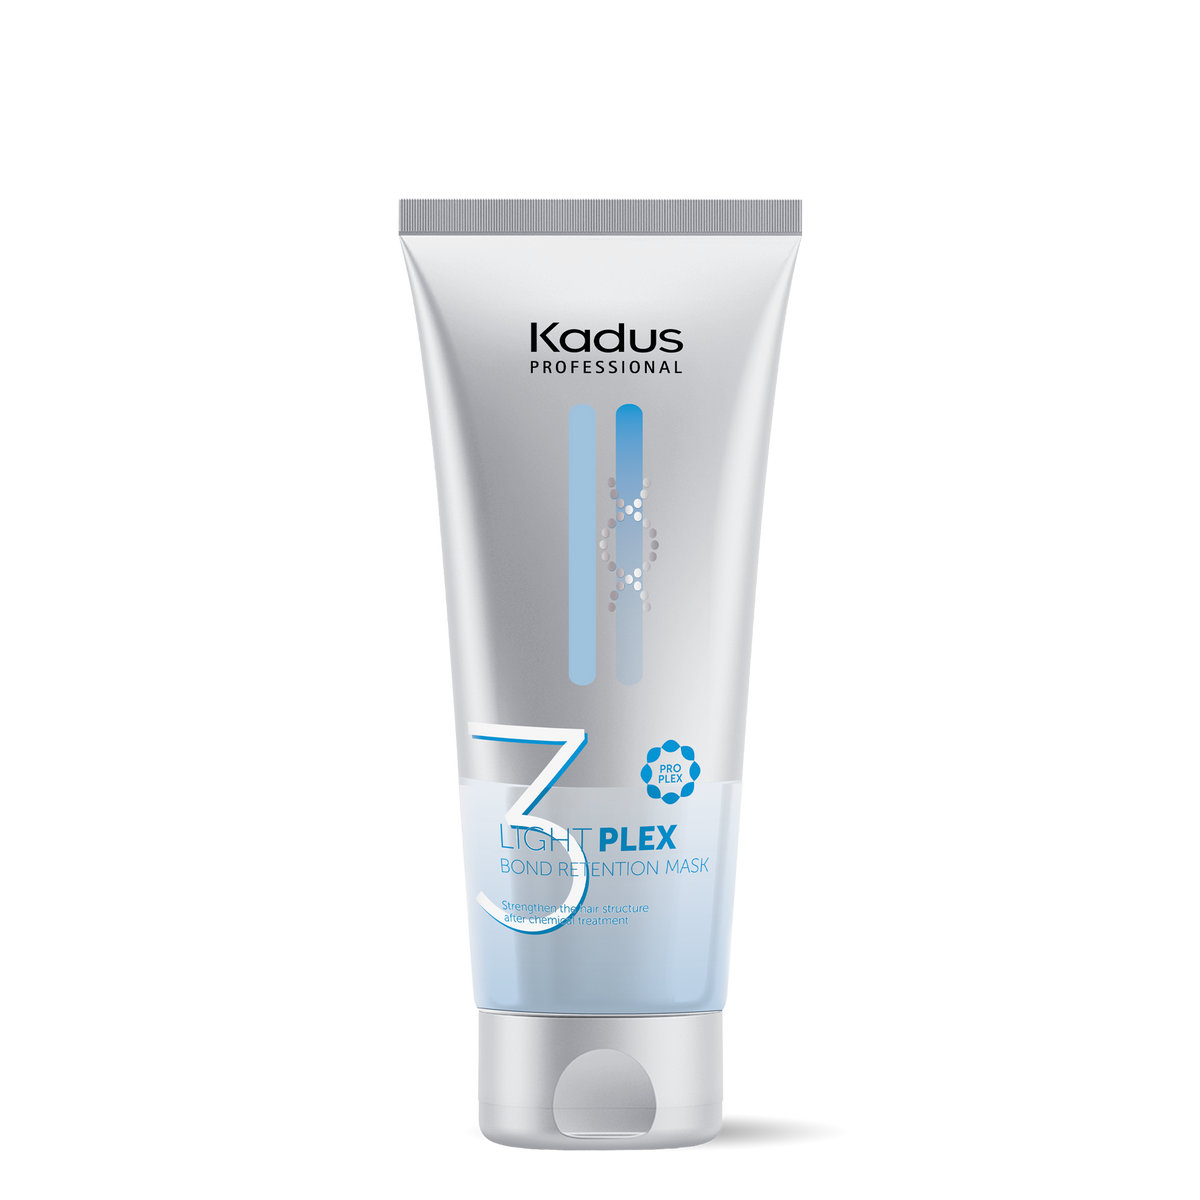 Kadus LIGHTPLEX Bond Retention Mask 200ml - by Kadus Professionals |ProCare Outlet|